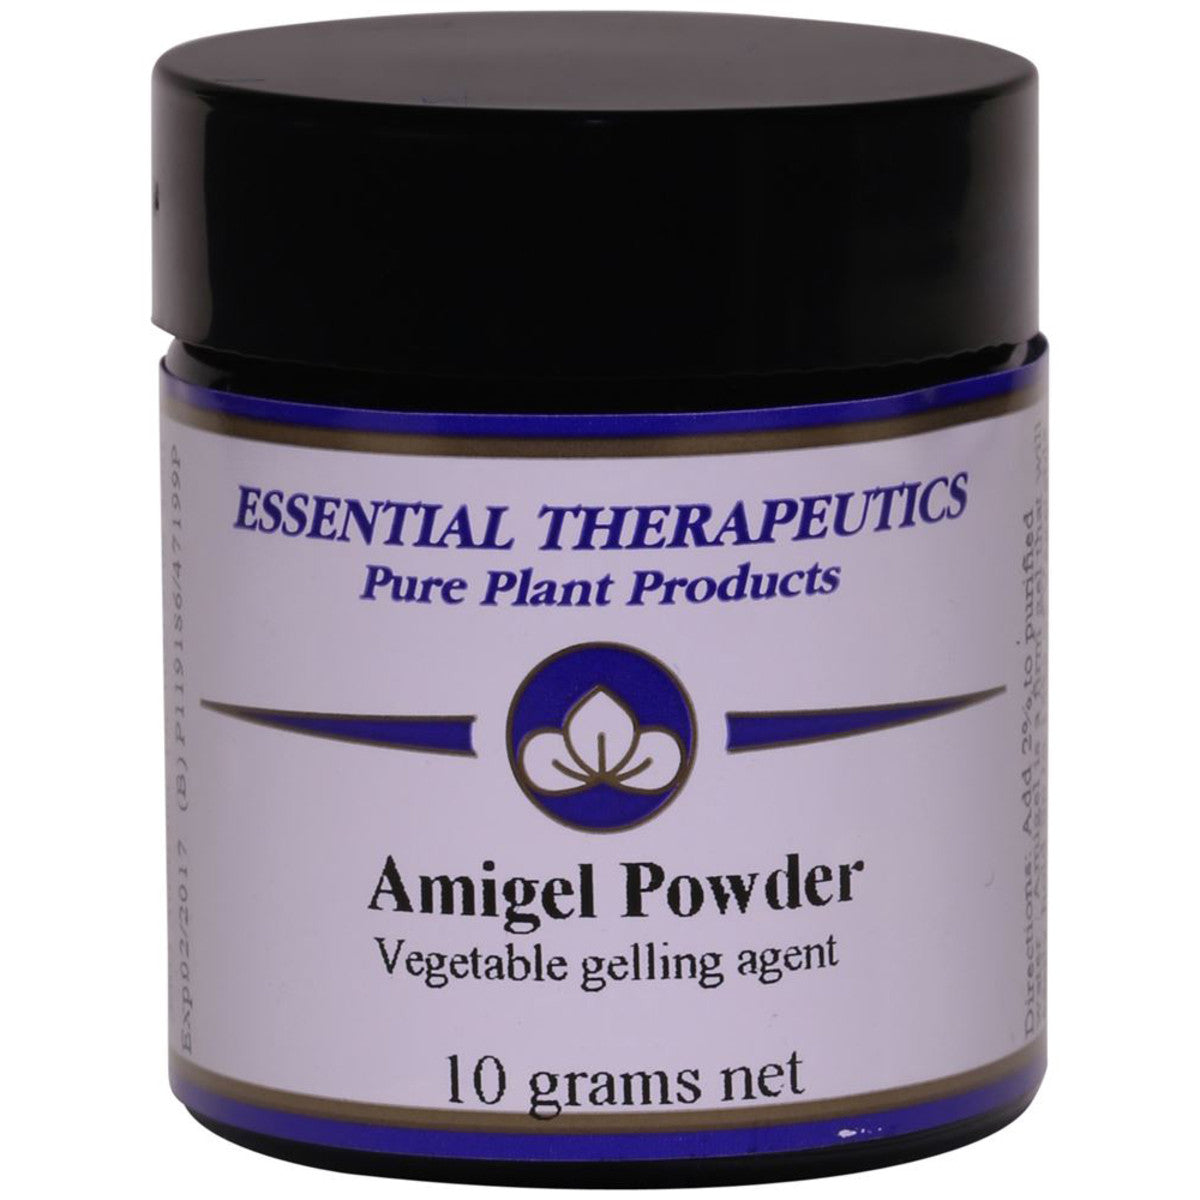 Essential Therapeutics - Amigel Powder 10g